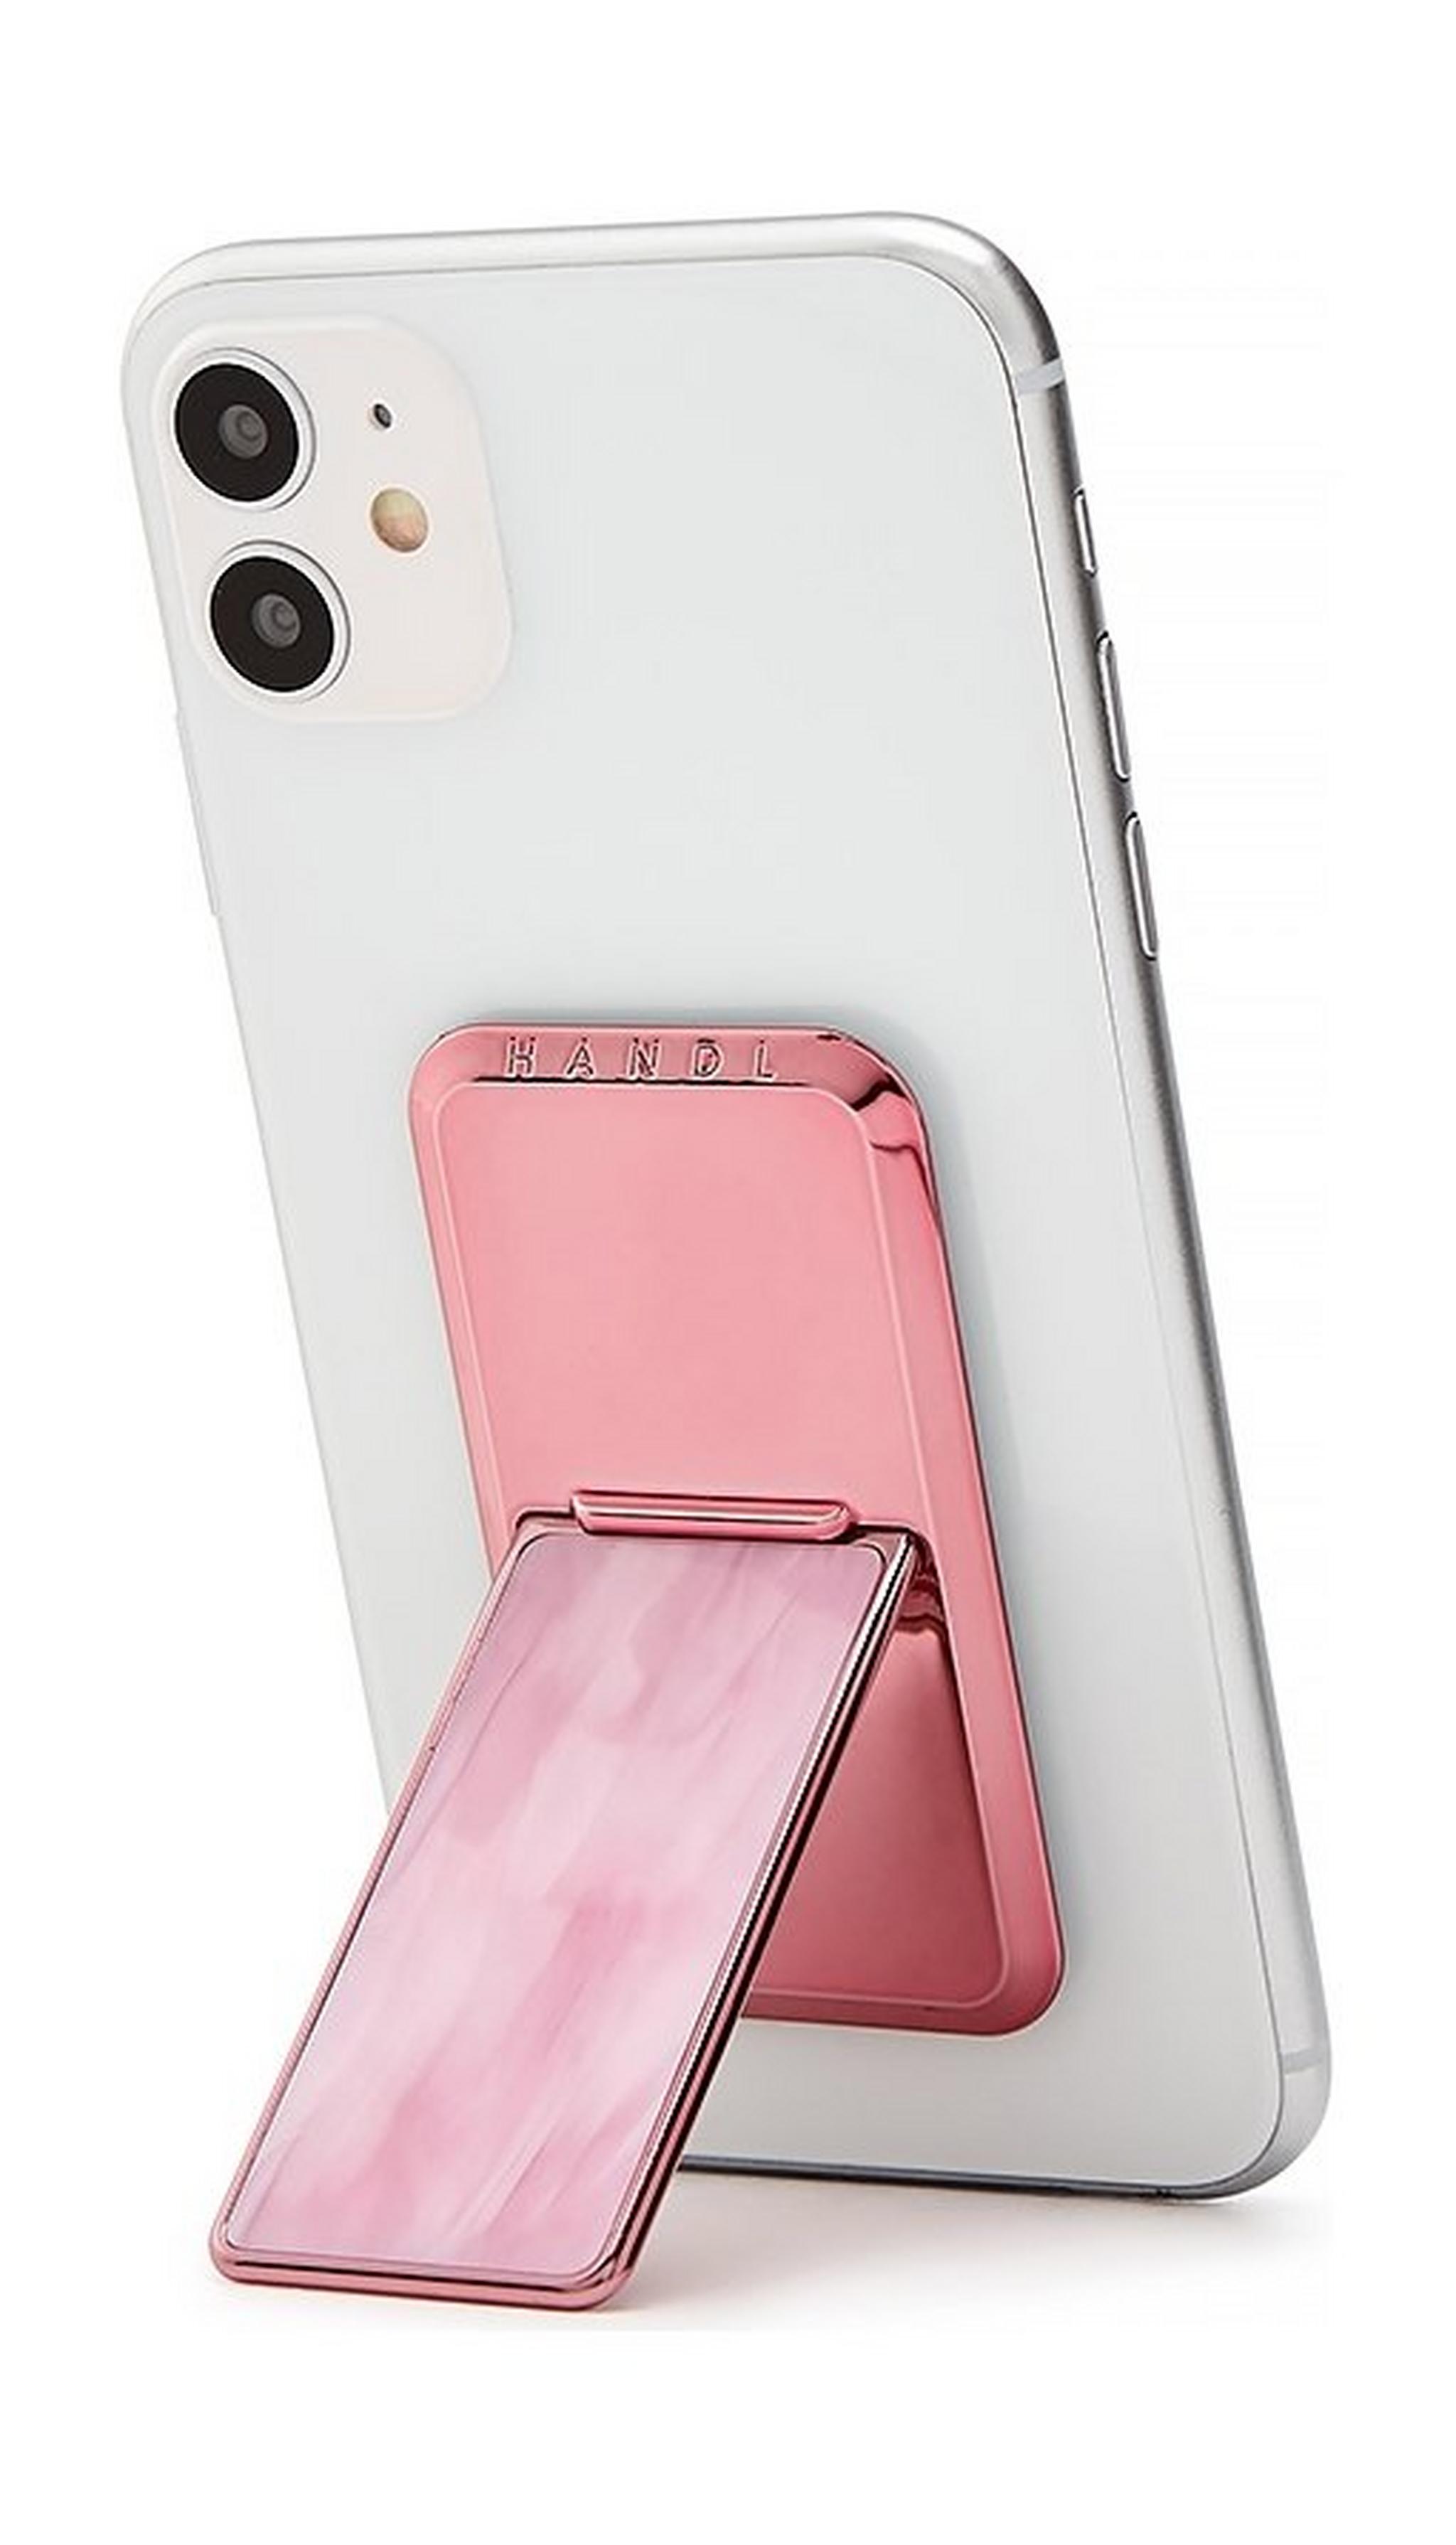 HANDLstick Marble Smartphone Holder - Pink